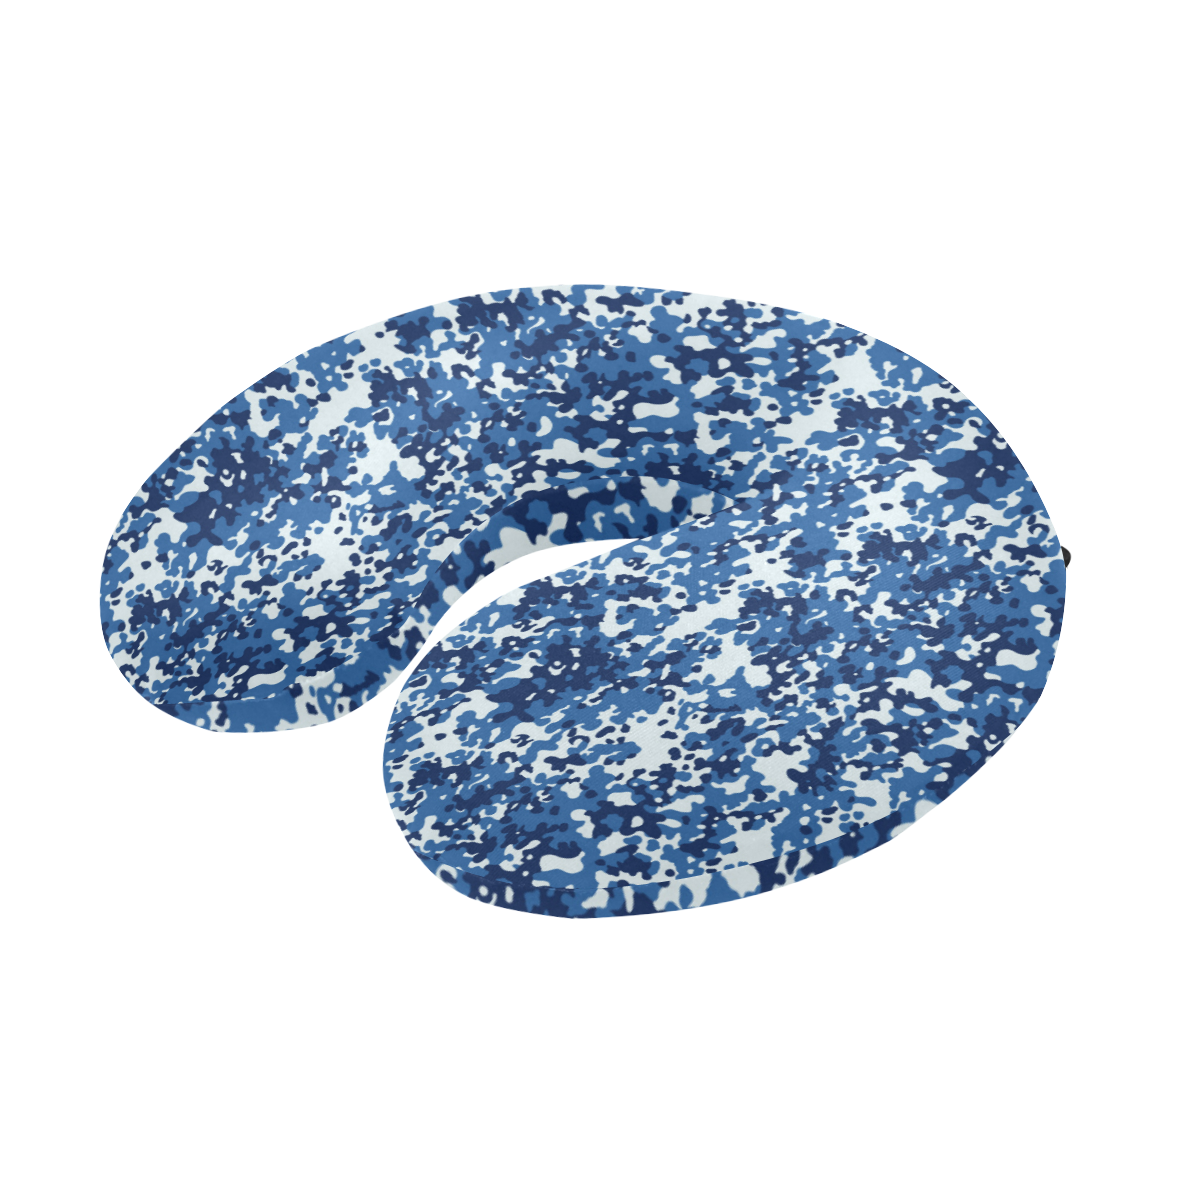 Digital Blue Camouflage U-Shape Travel Pillow